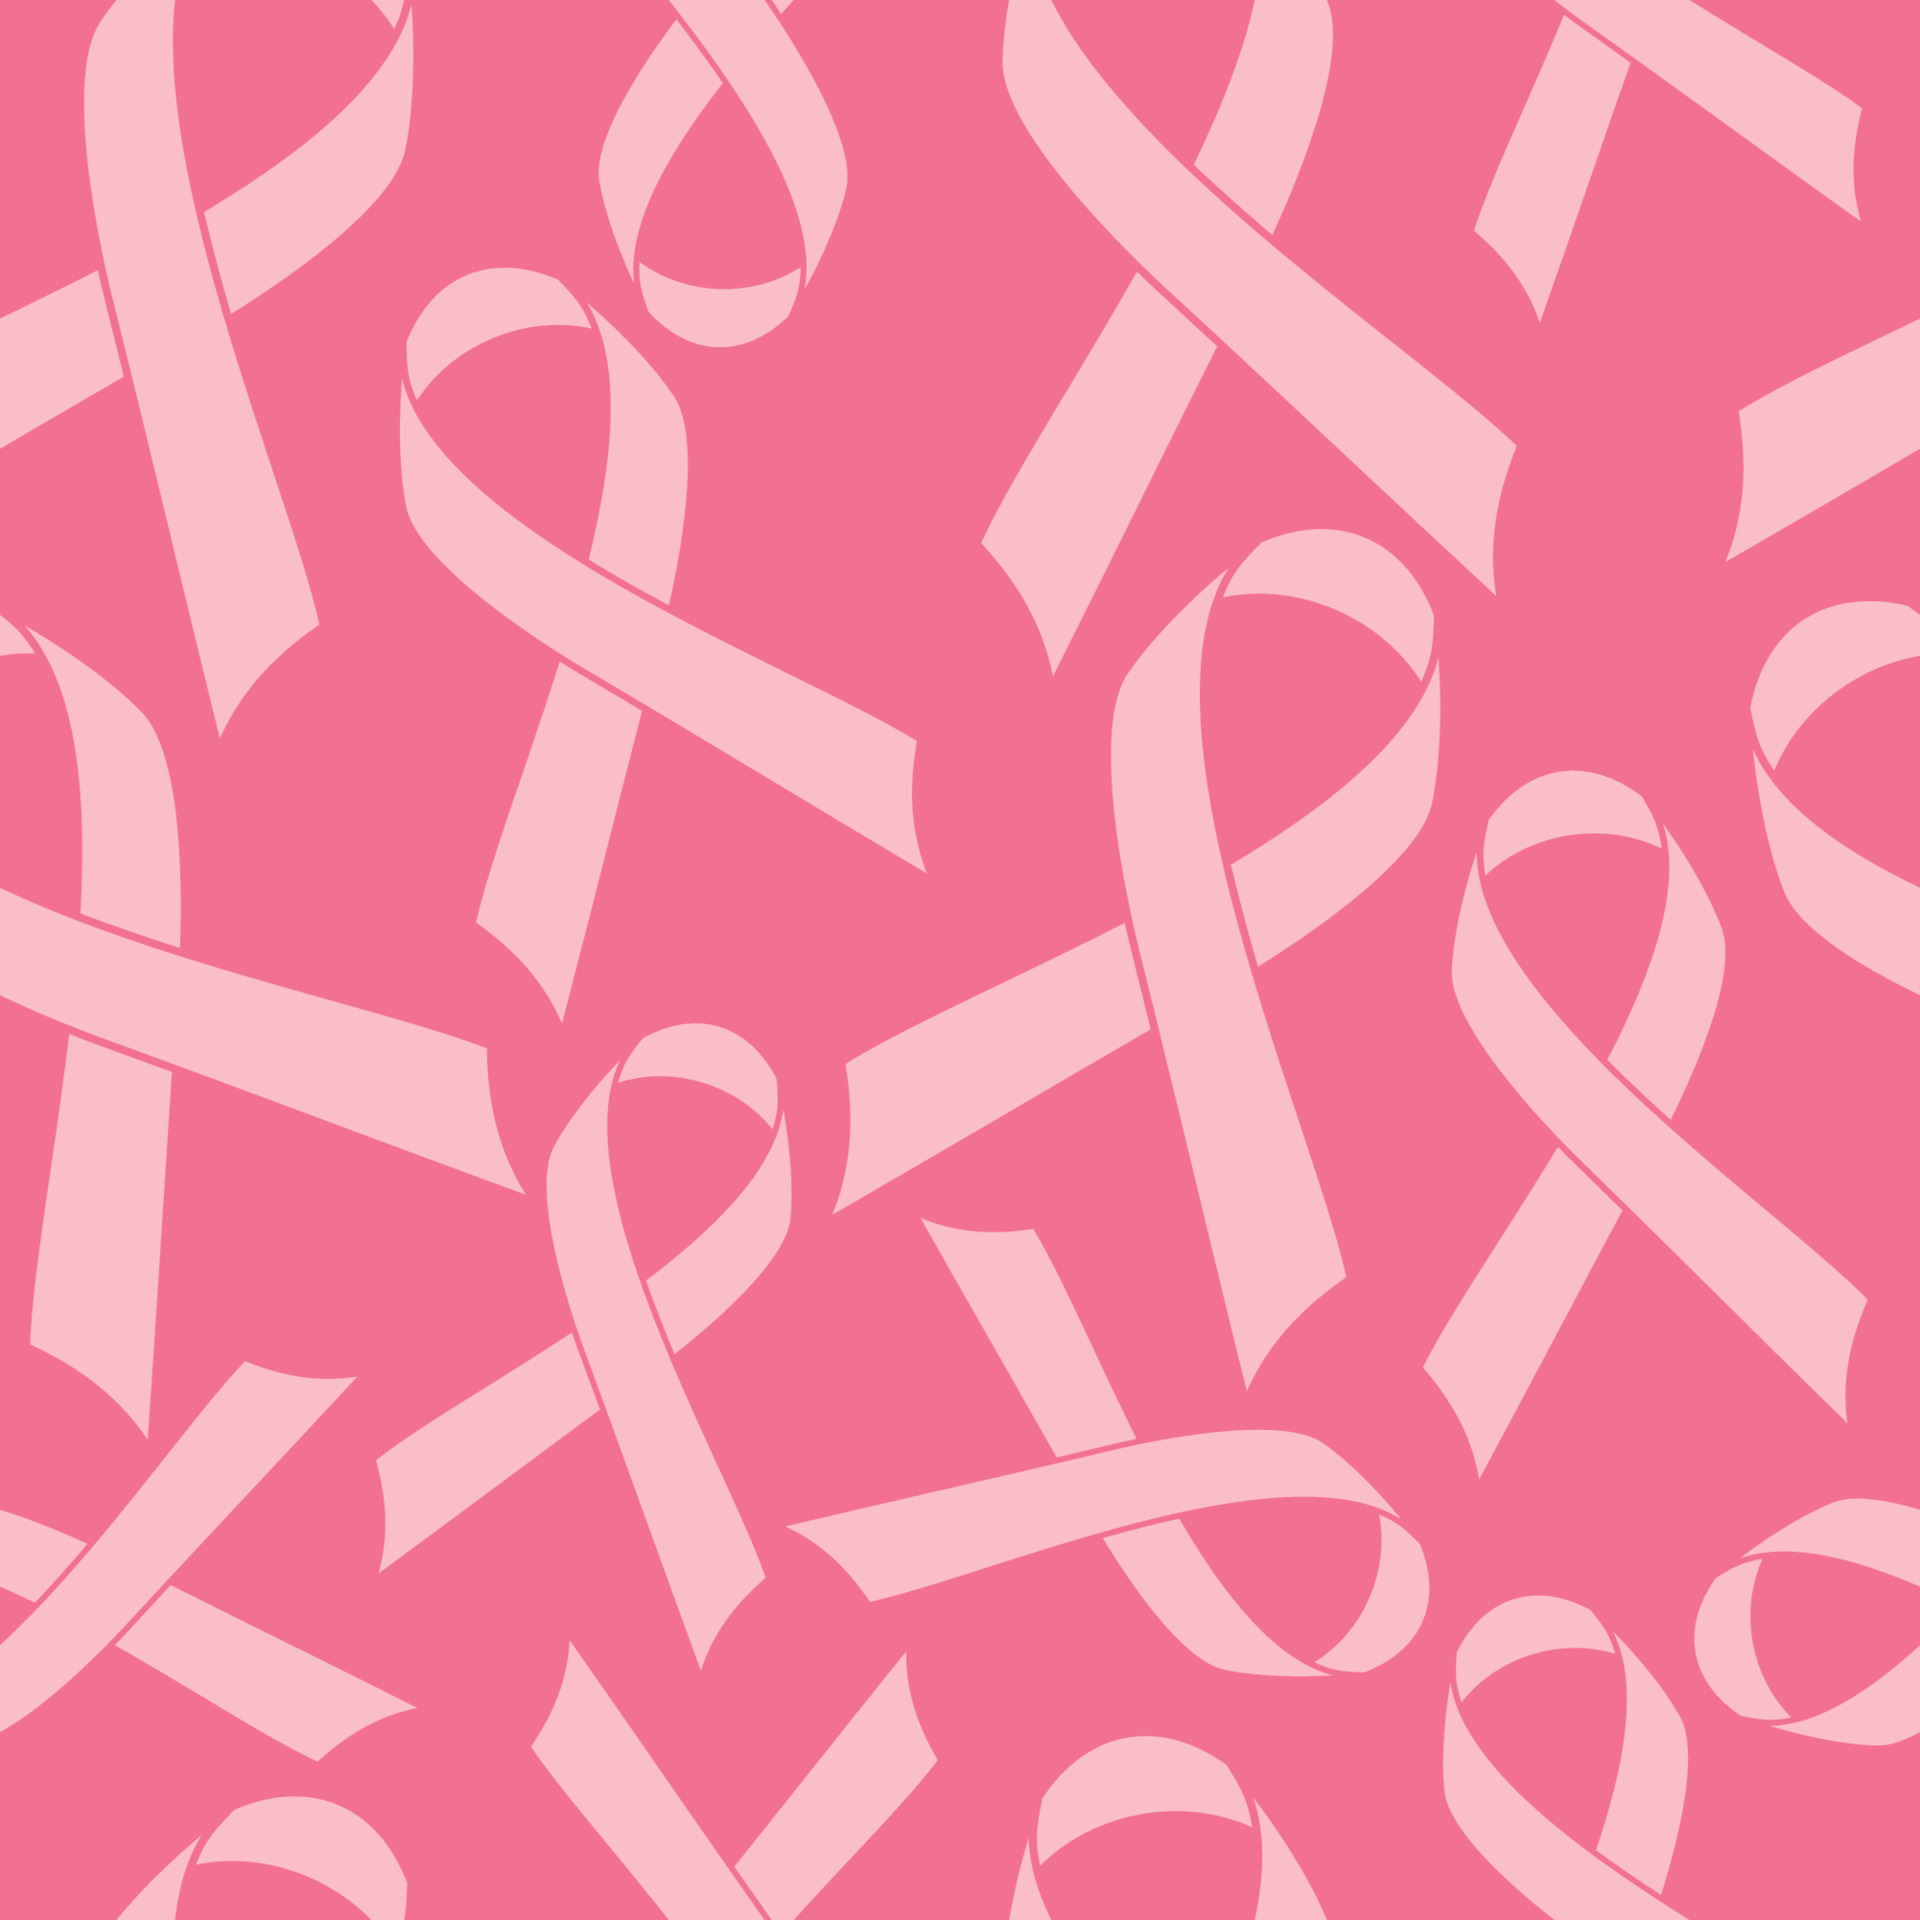 1920x1920 Pink Ribbon seamless Pattern cancer medical background vector illustration 3705608 Vector Art